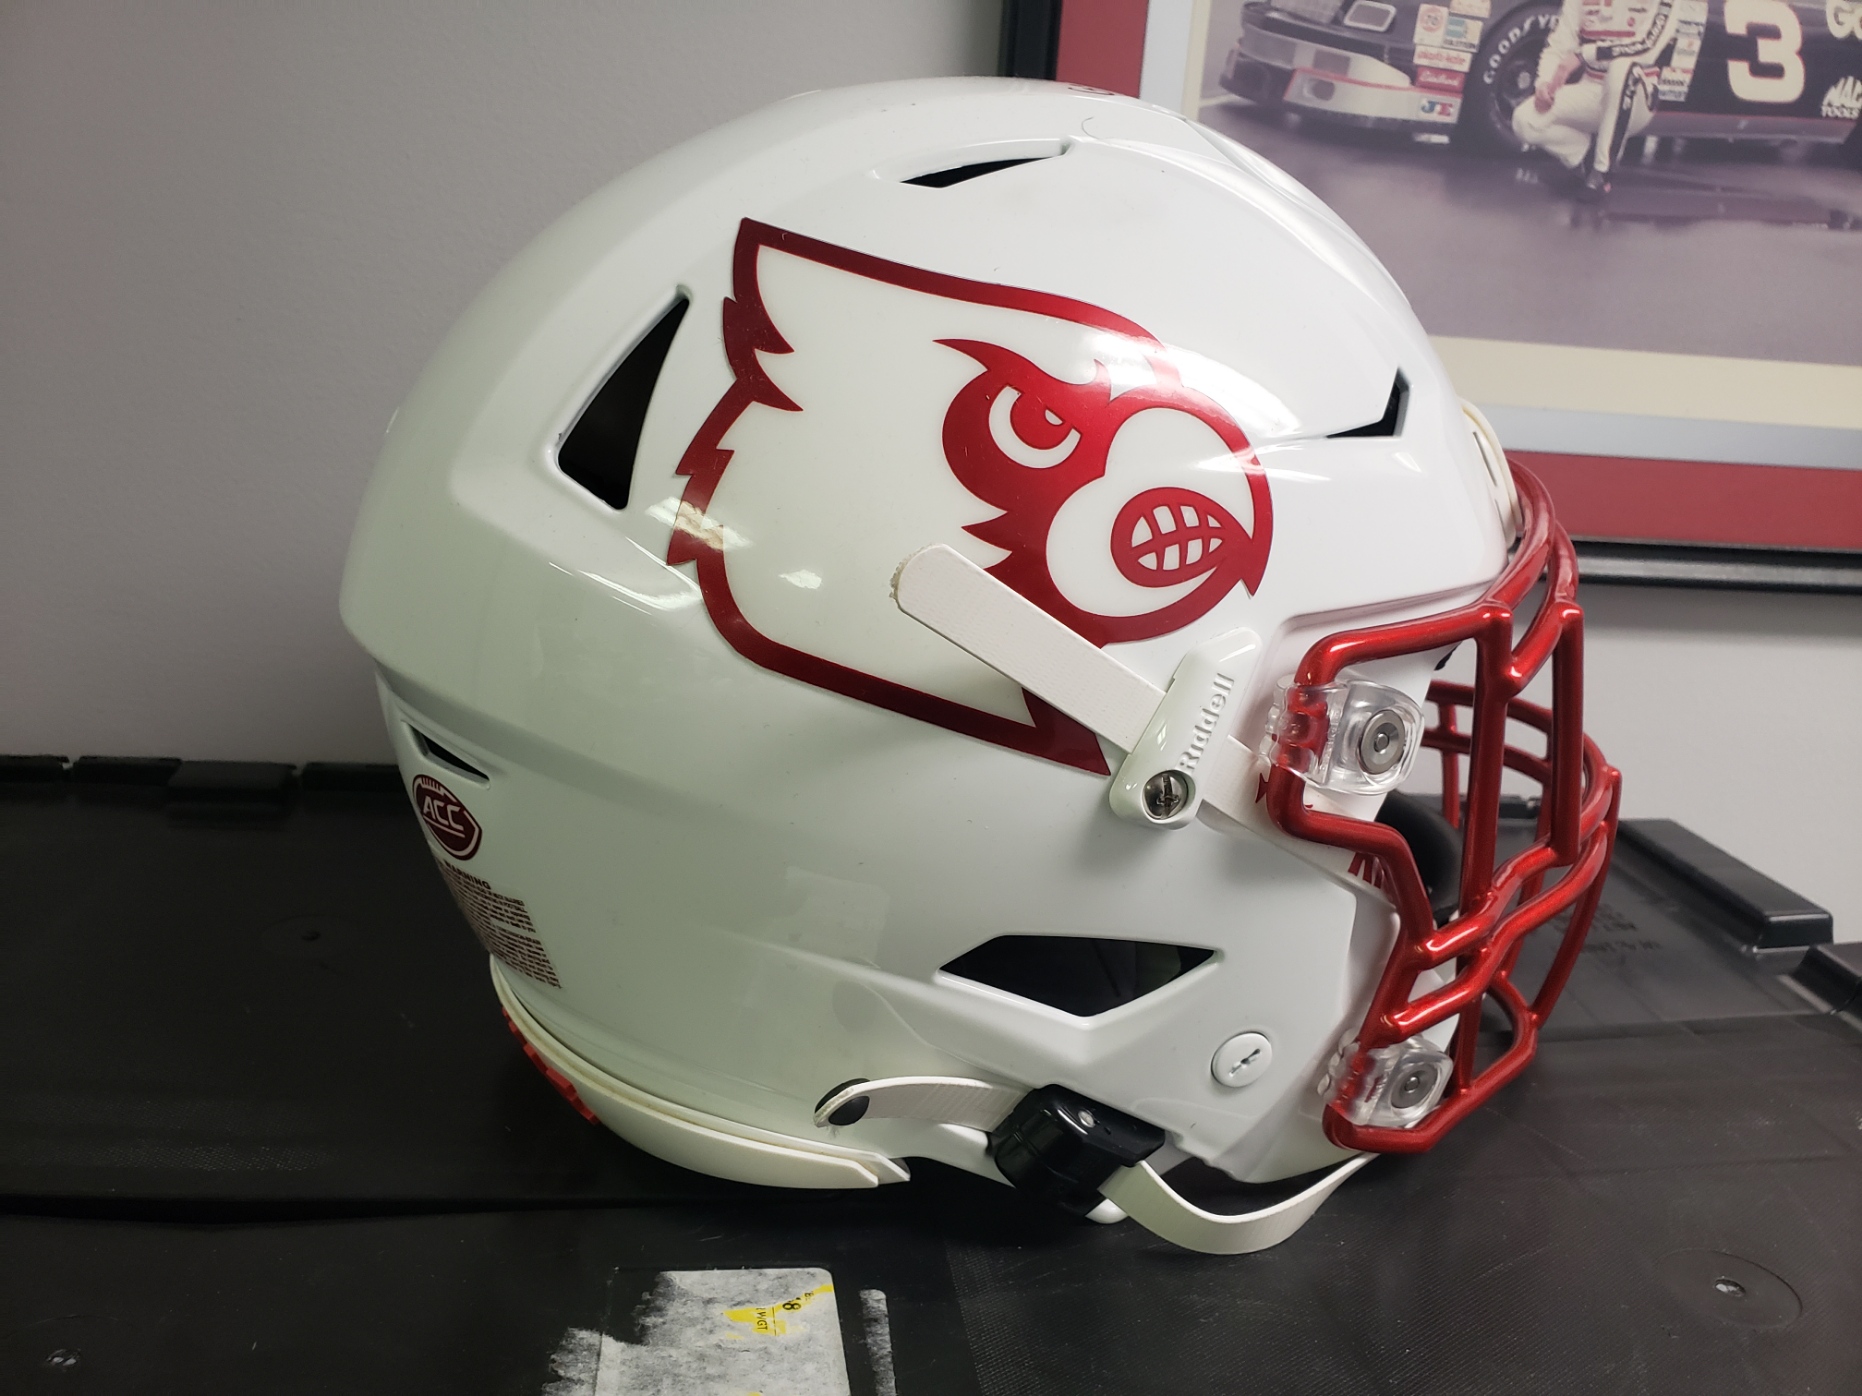 Louisville Cardinals LED Helmet Lamp